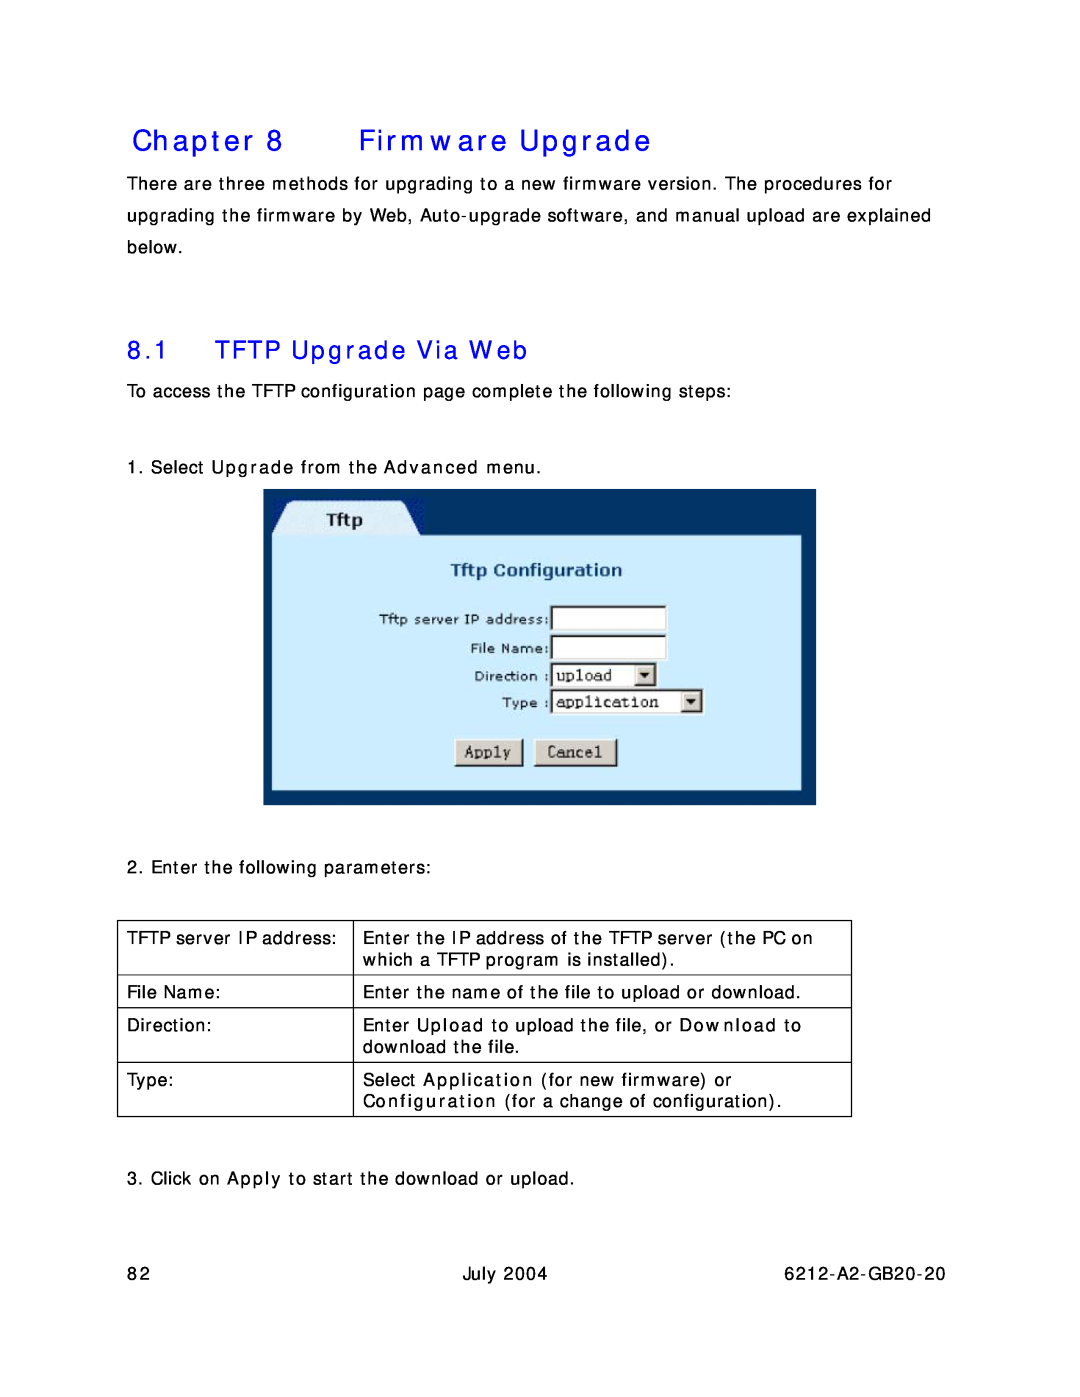 Paradyne 6212 manual Firmware Upgrade, TFTP Upgrade Via Web 